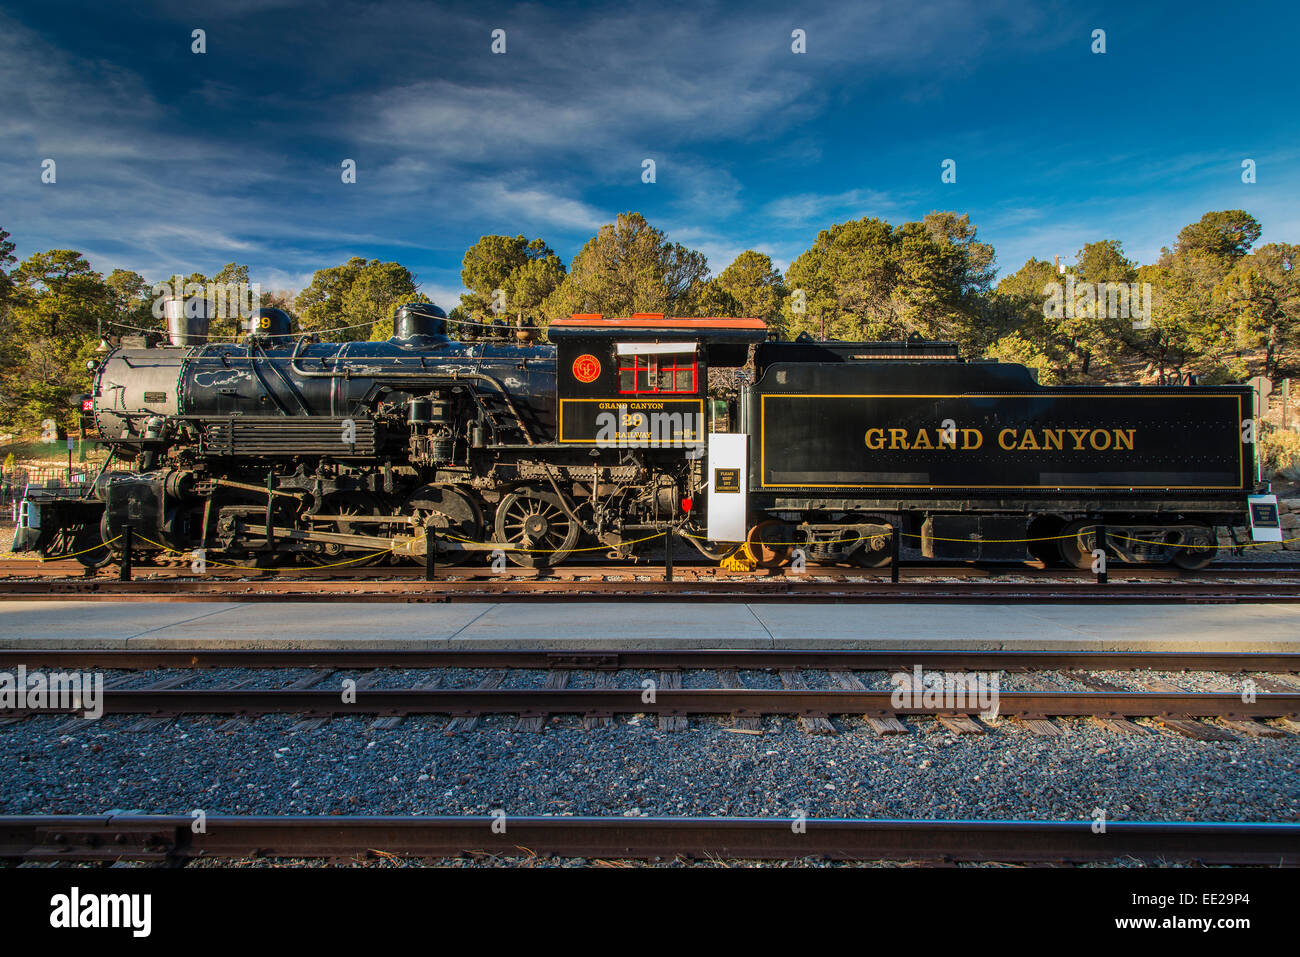 Grand Canyon Railway GCRX Motor 29 Dampflokomotive im Depot der Grand Canyon Railway Station, Arizona, USA Stockfoto